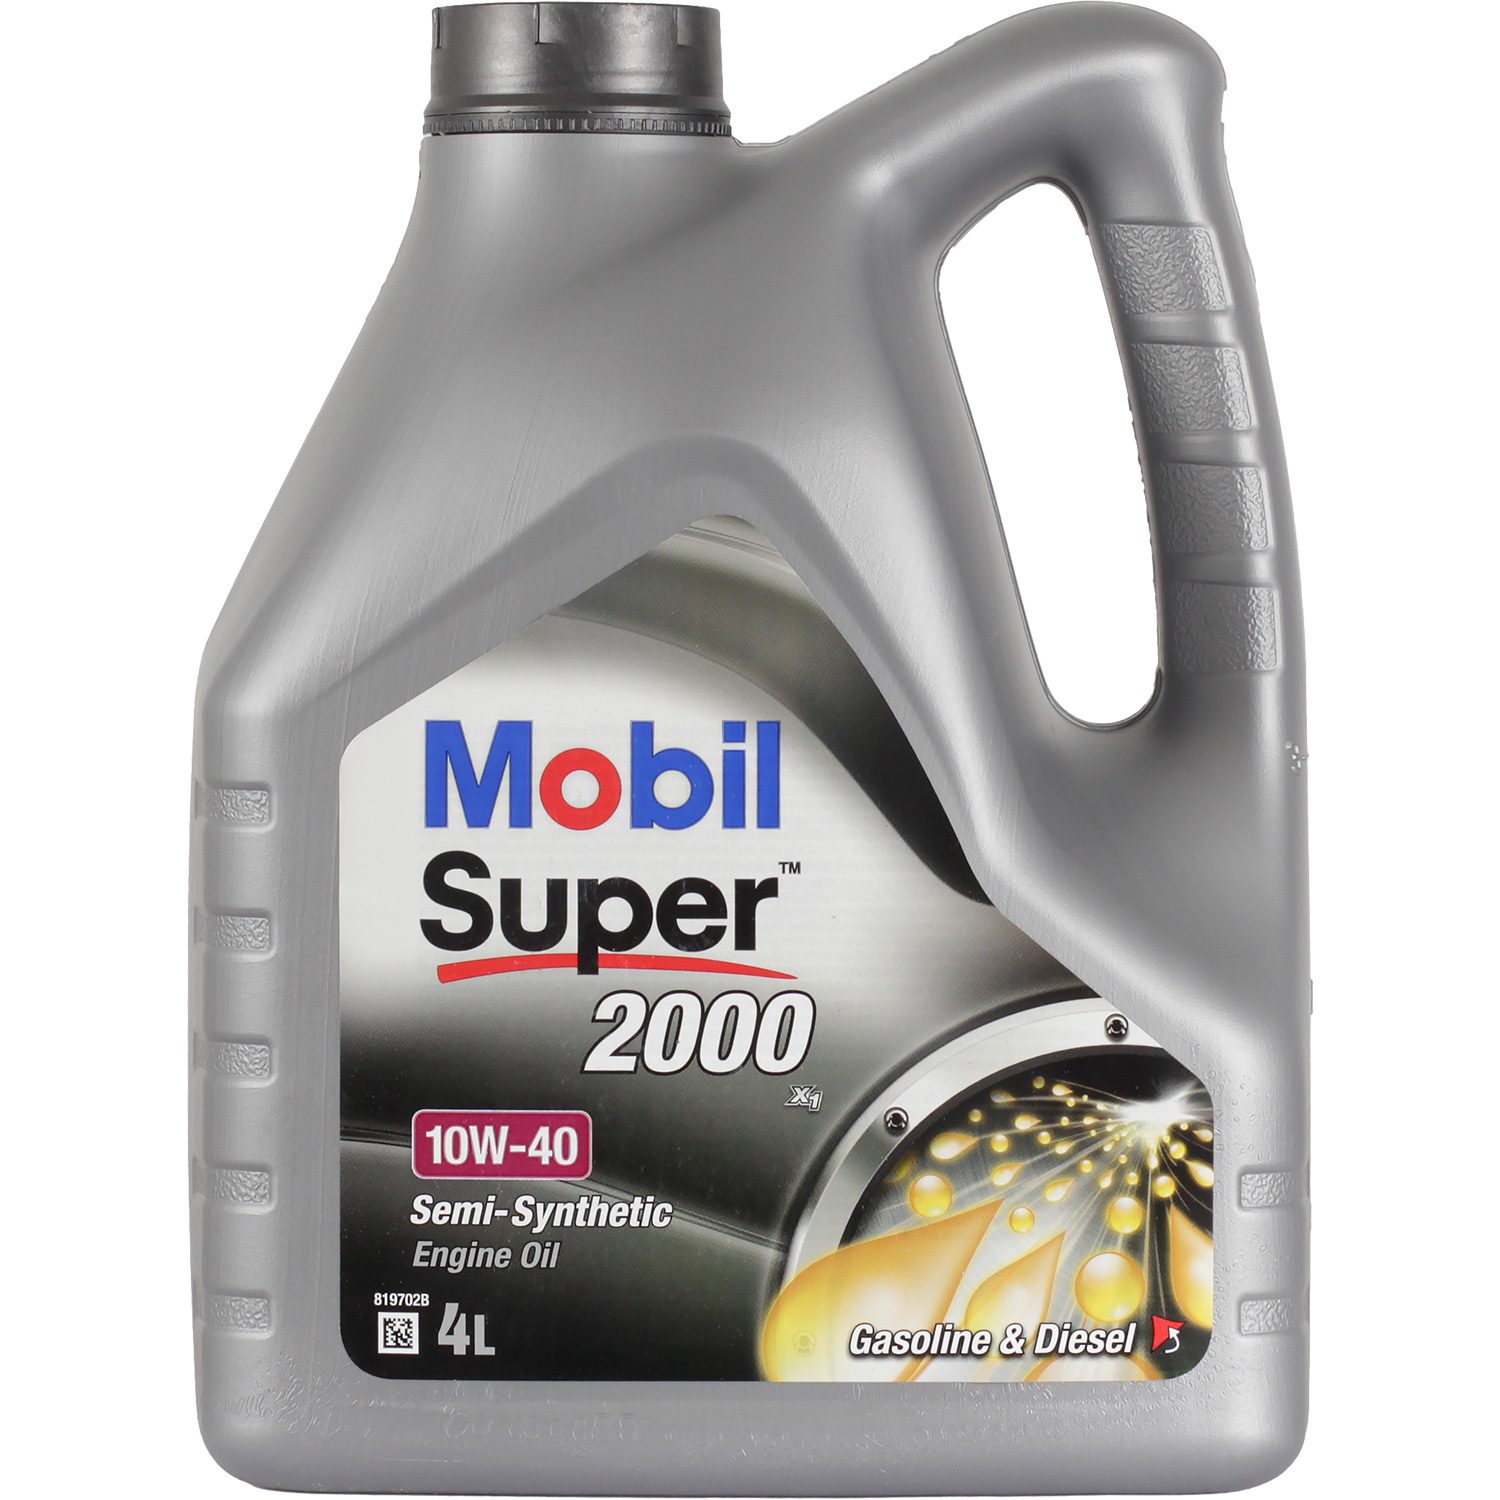 Mobil Моторное масло Mobil Super 2000 X1 10W-40, 4 л масло моторное mobil super 2000 x1 10w 40 1 л